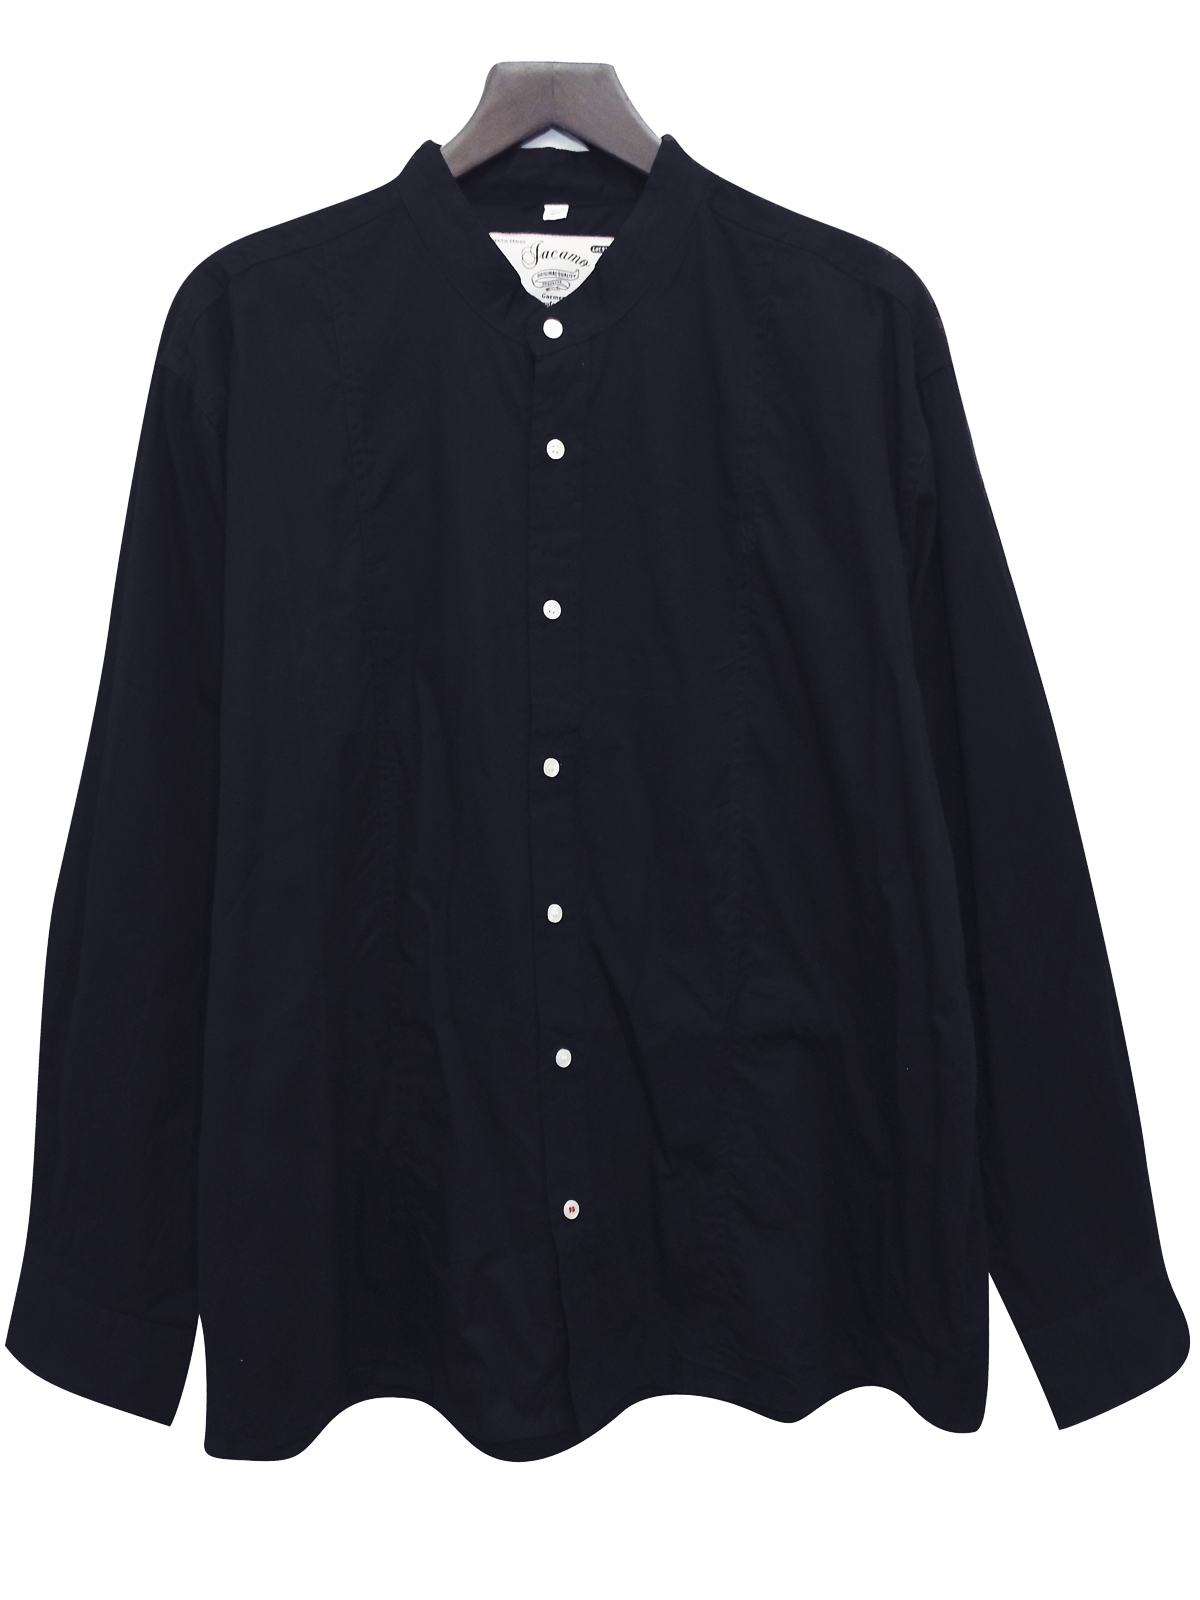 Jacamo - - Jacamo BLACK Mens Pure Cotton Poplin Shirt - Plus Size ...